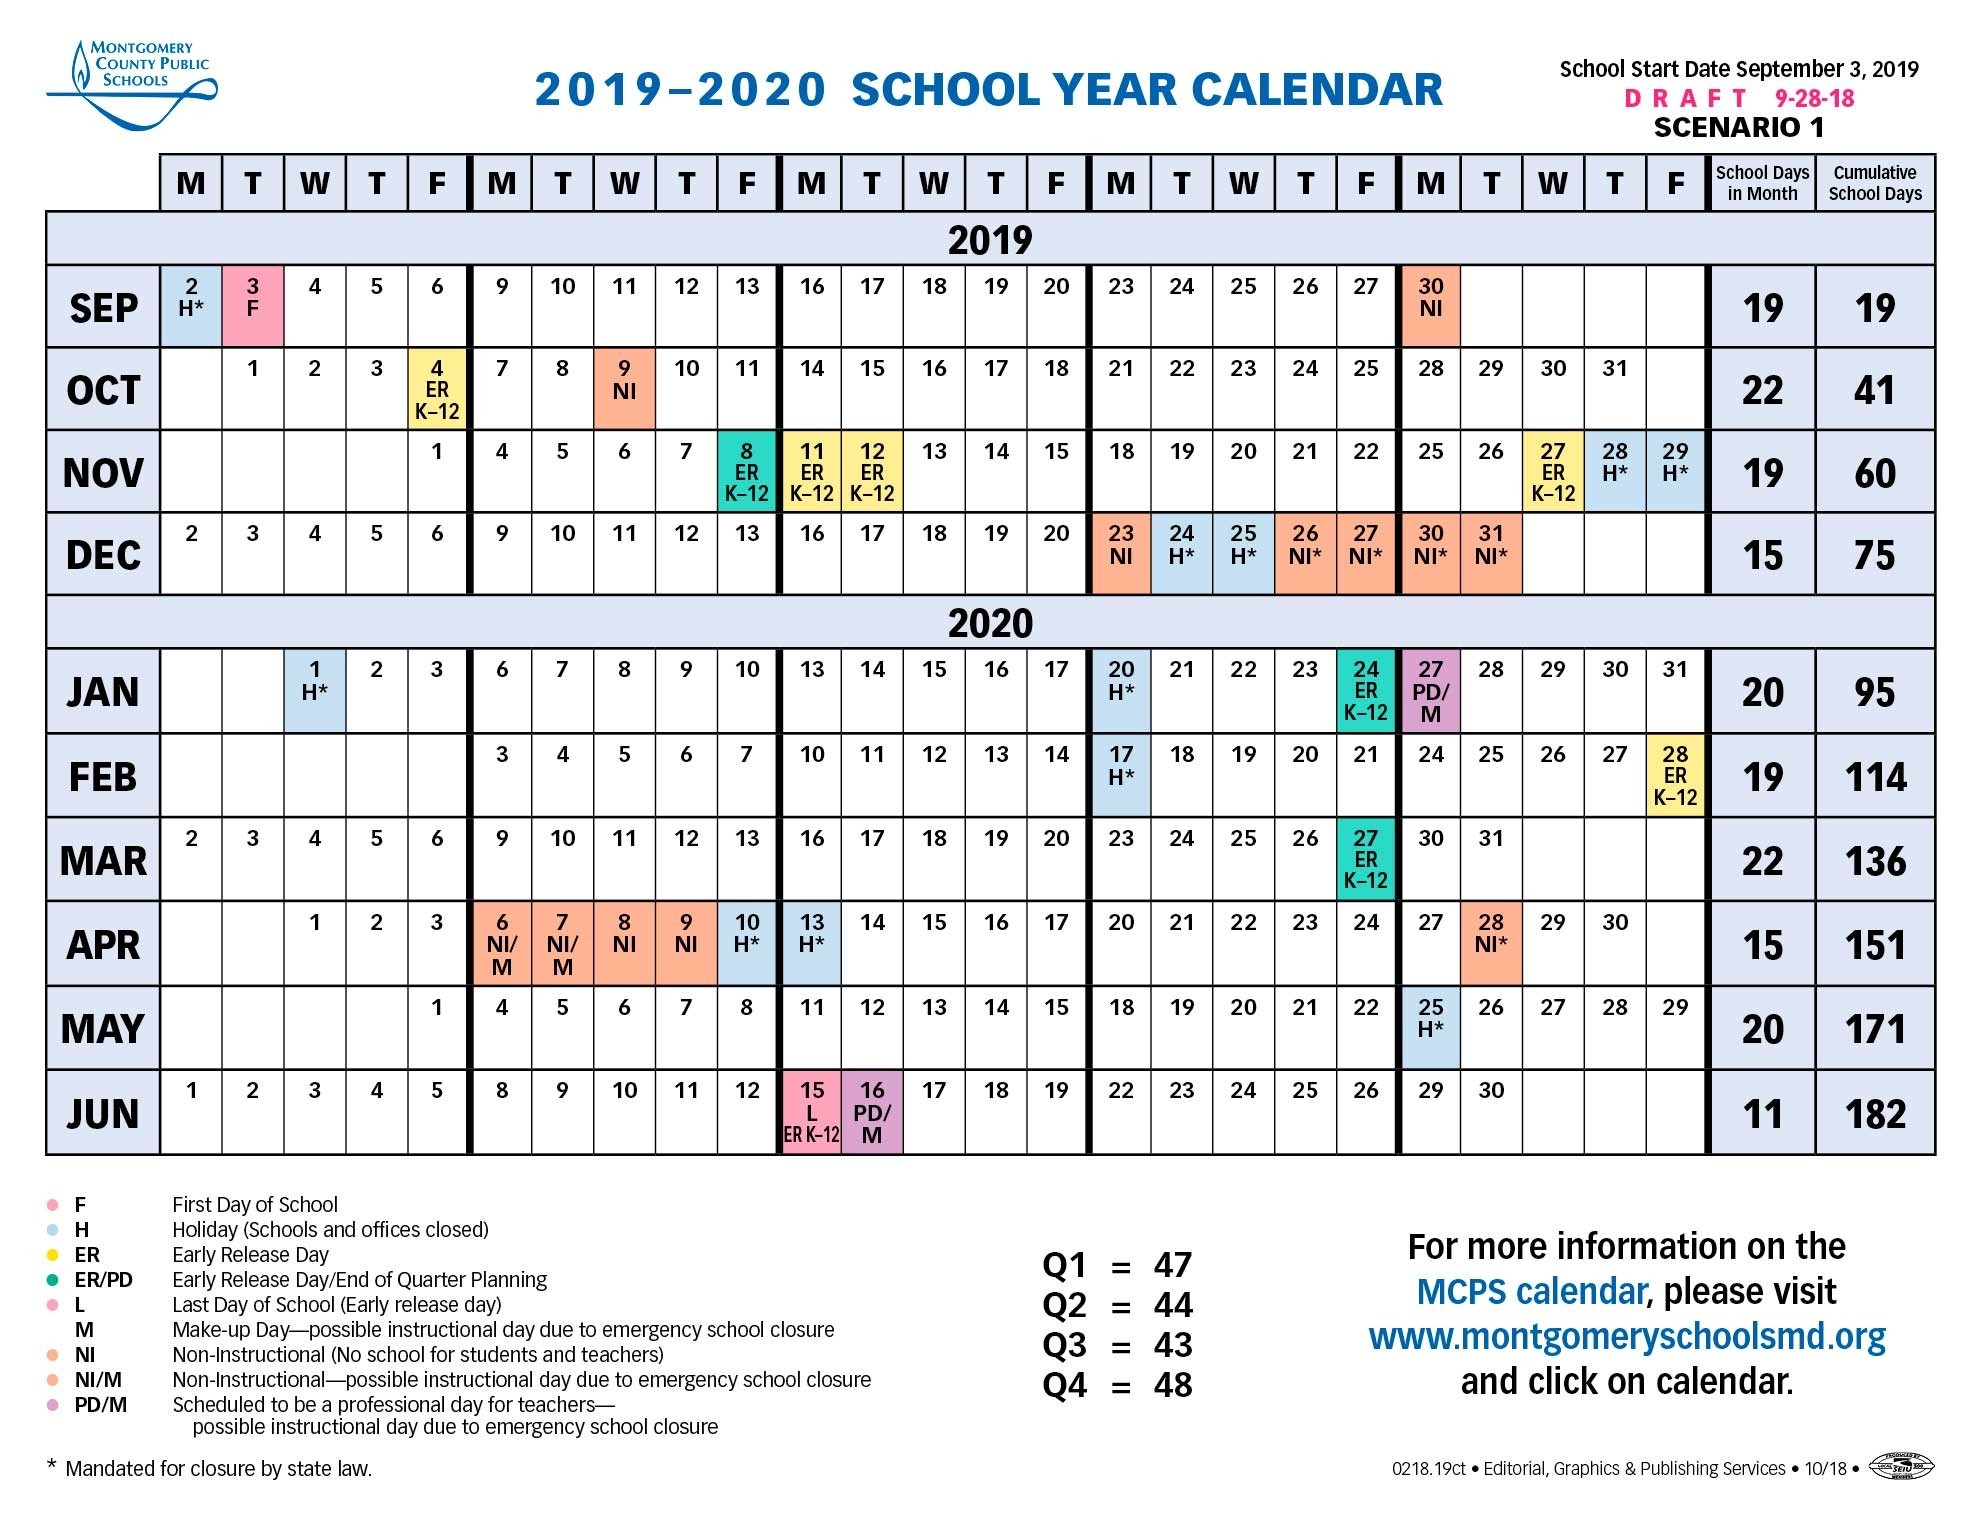 School Board Approves Longer Spring Break For 2019-2020-Calendar 2020 Jewish Holidays